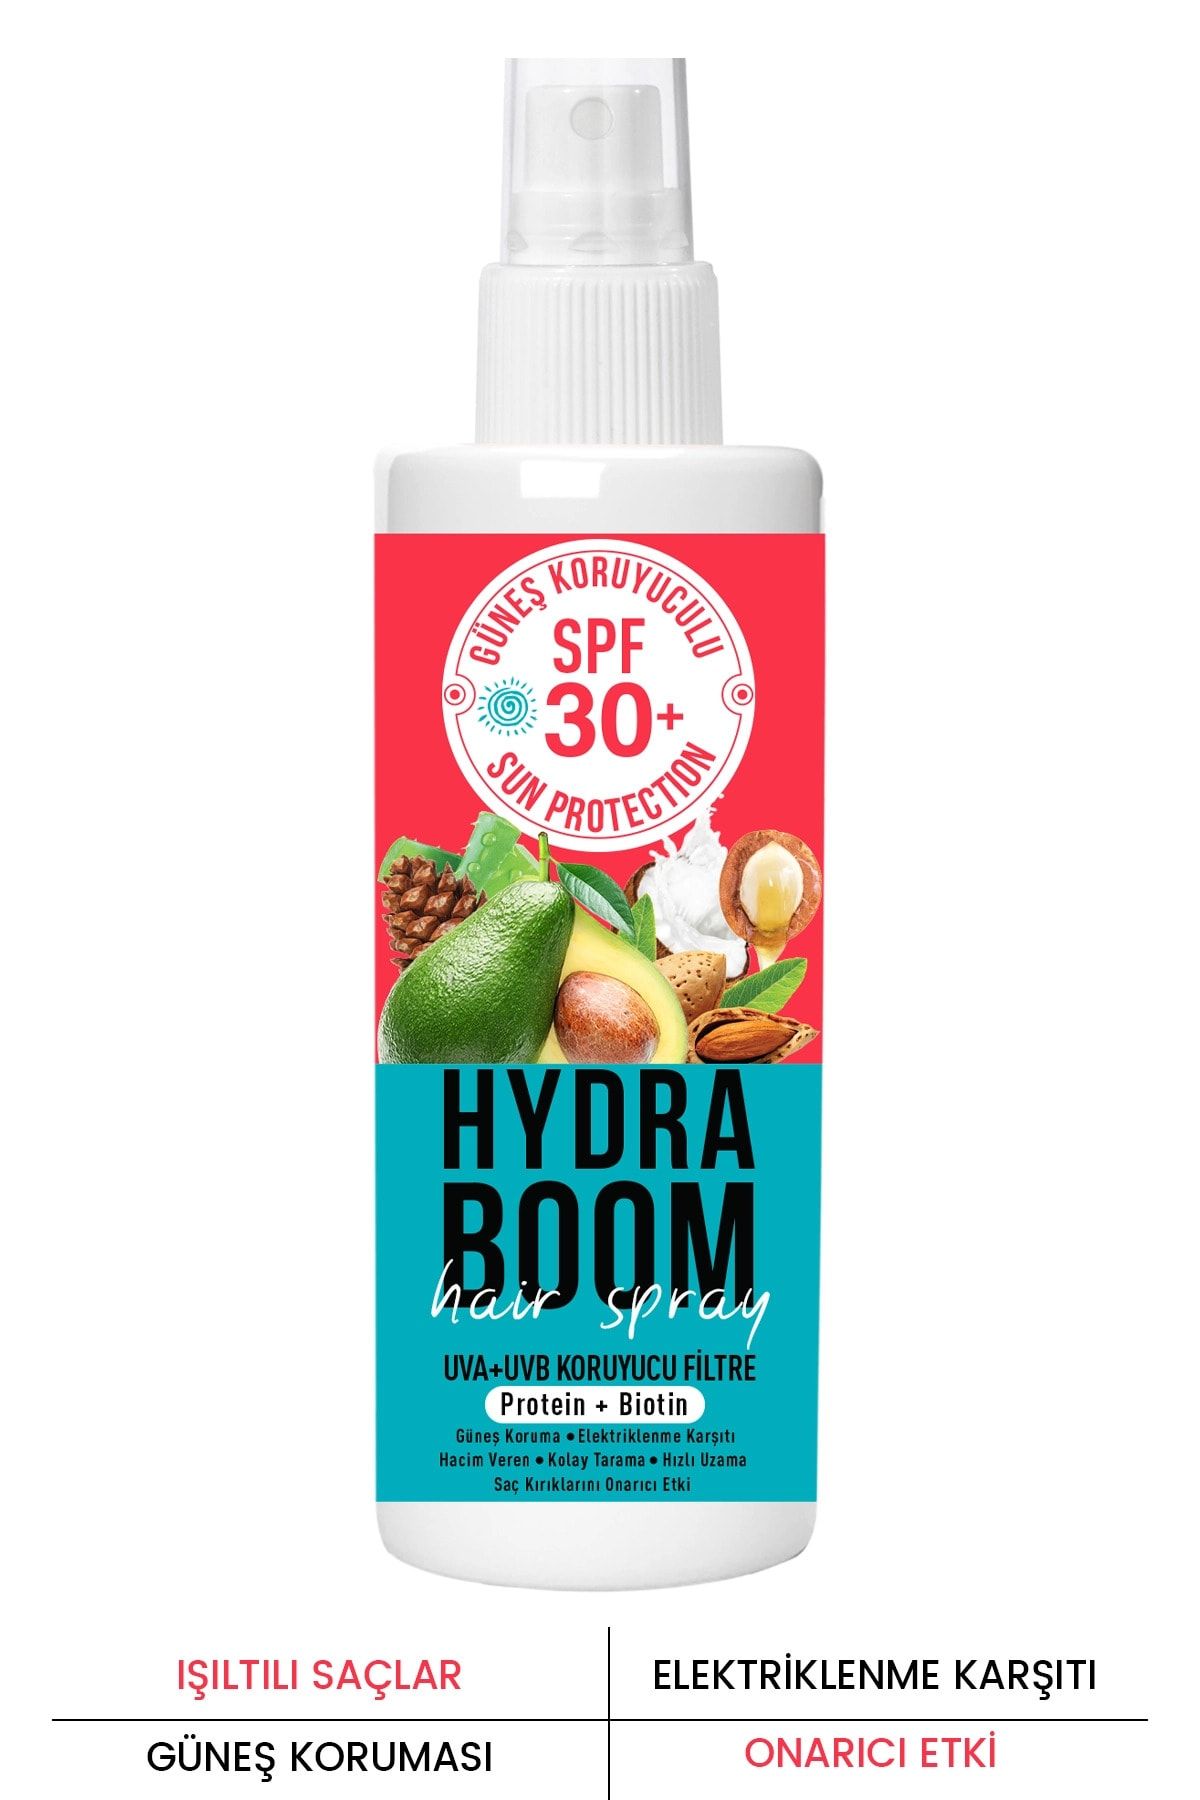 PROCSIN اسپری مو Hydra Boom SPF 30+ با ضد آفتاب 110 ML